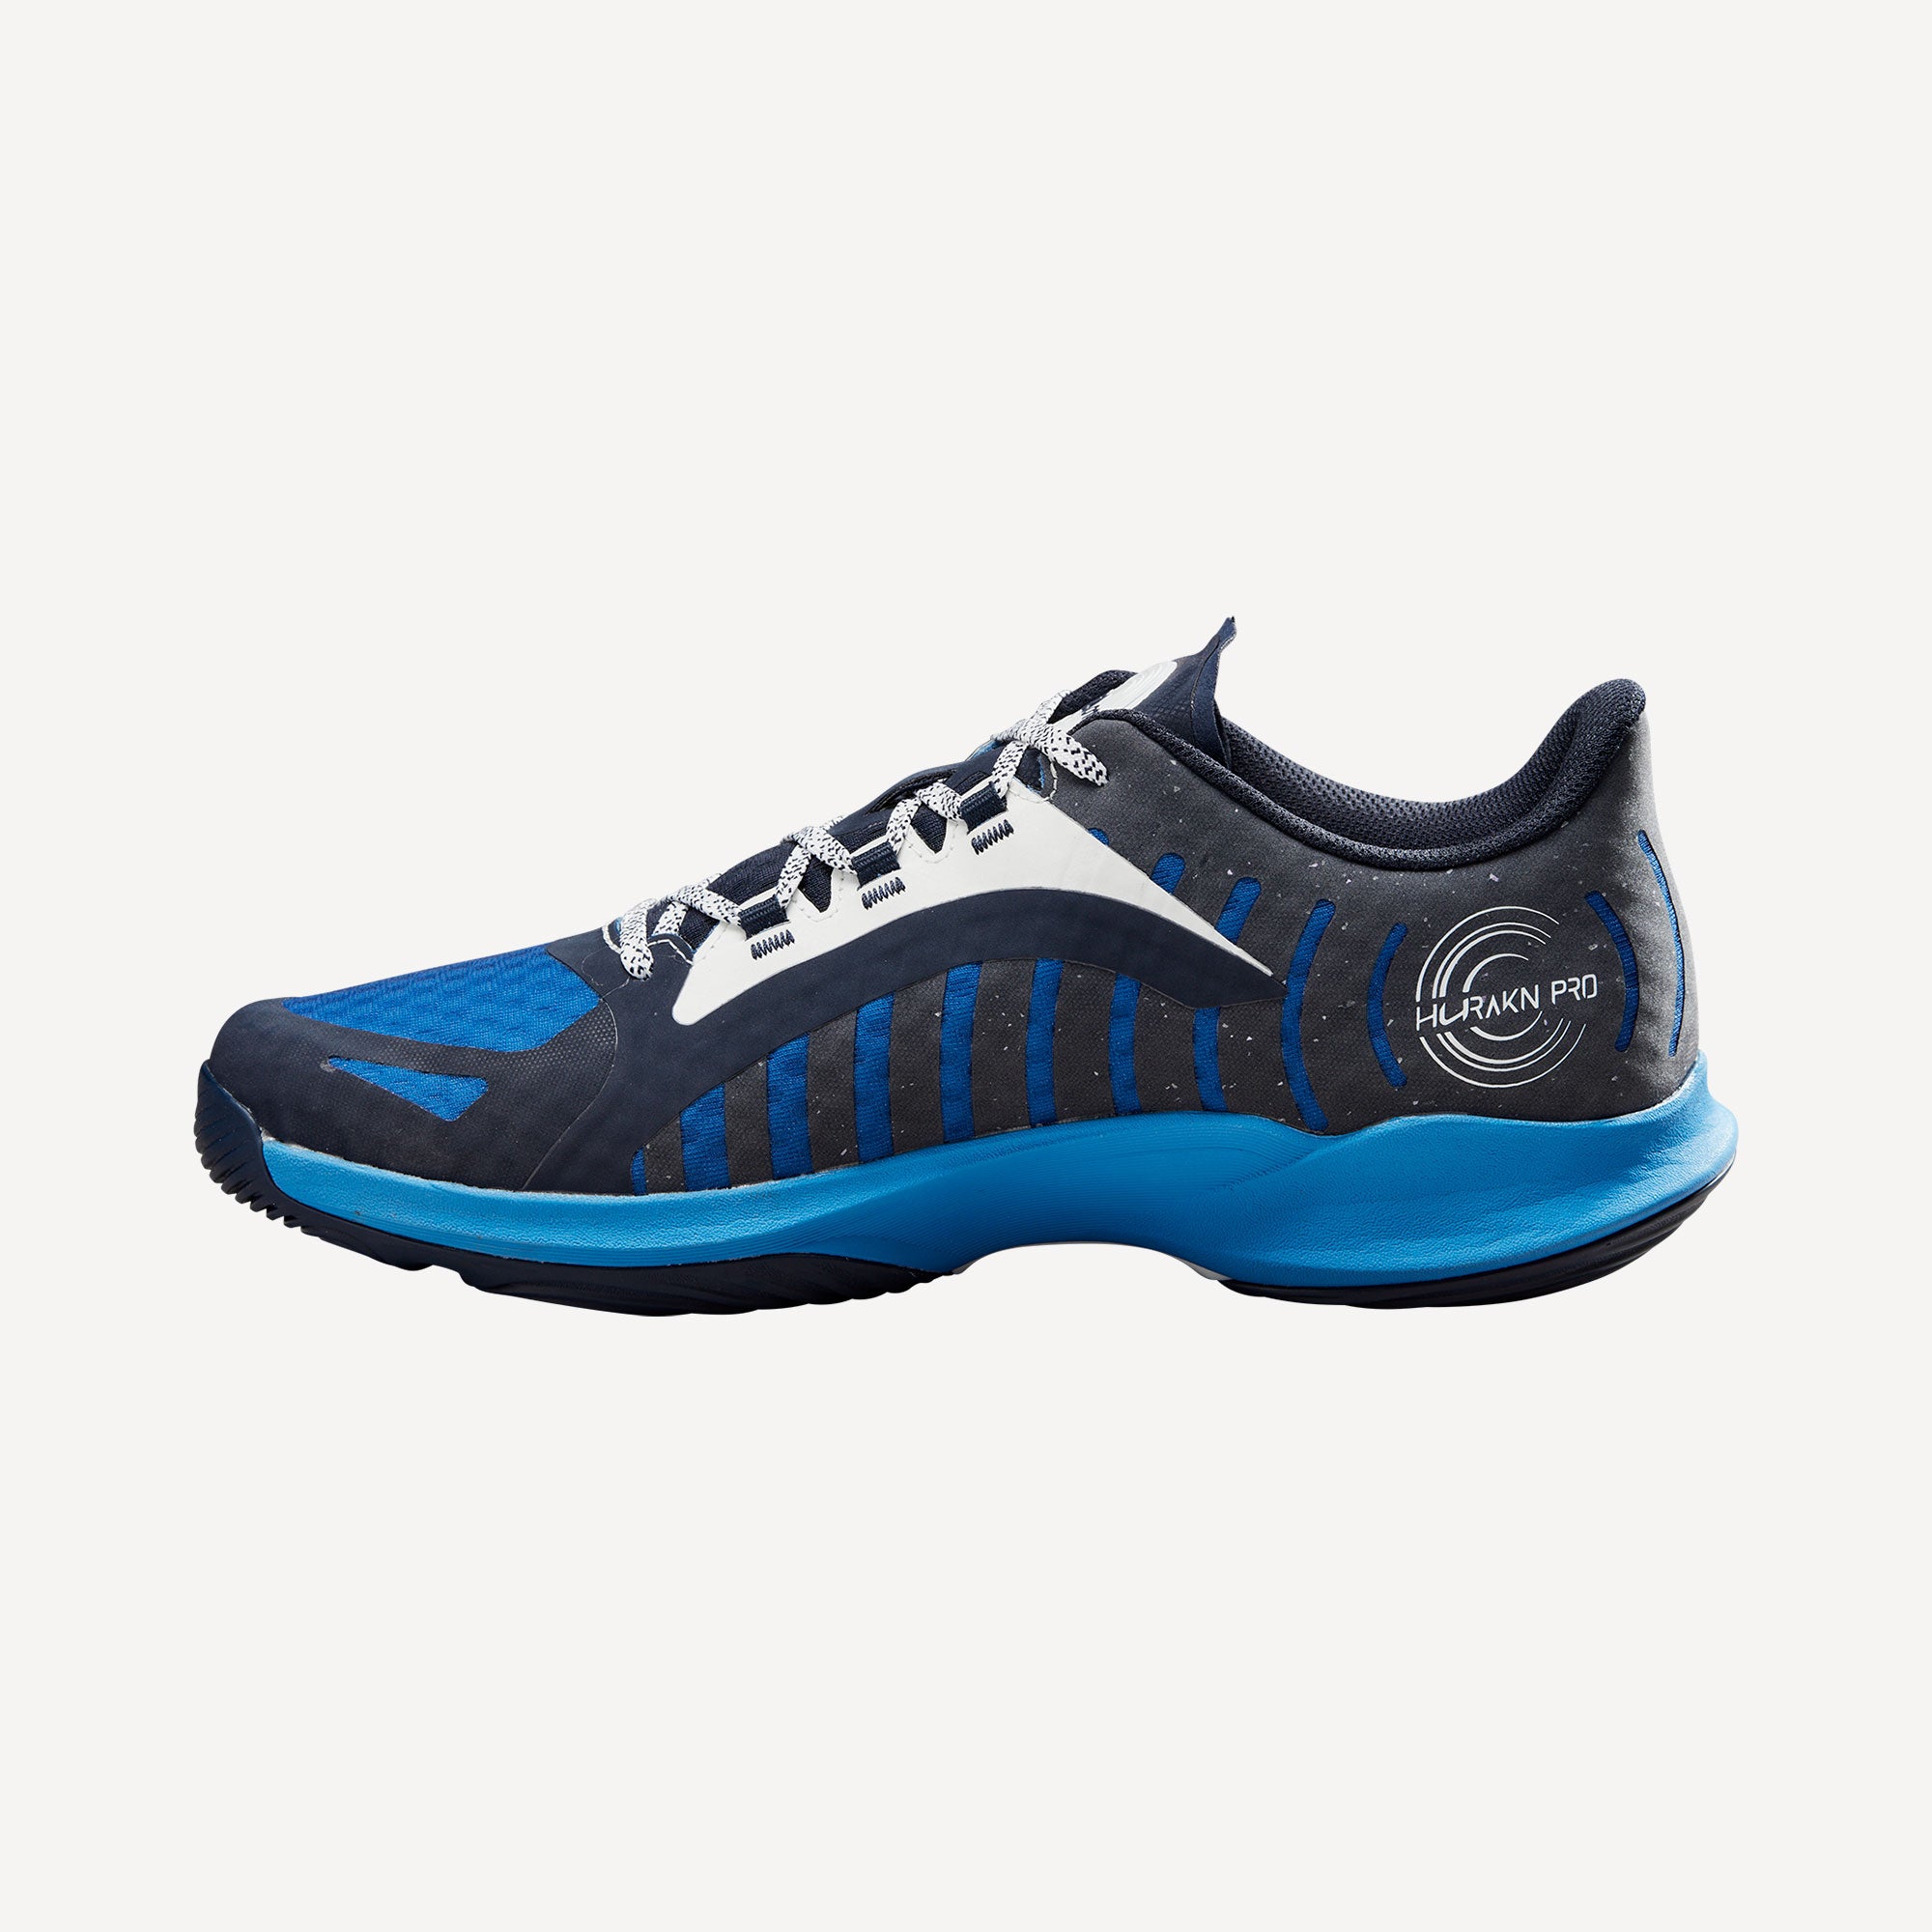 Wilson Hurakn Pro Men's Padel Shoes - Blue (3)